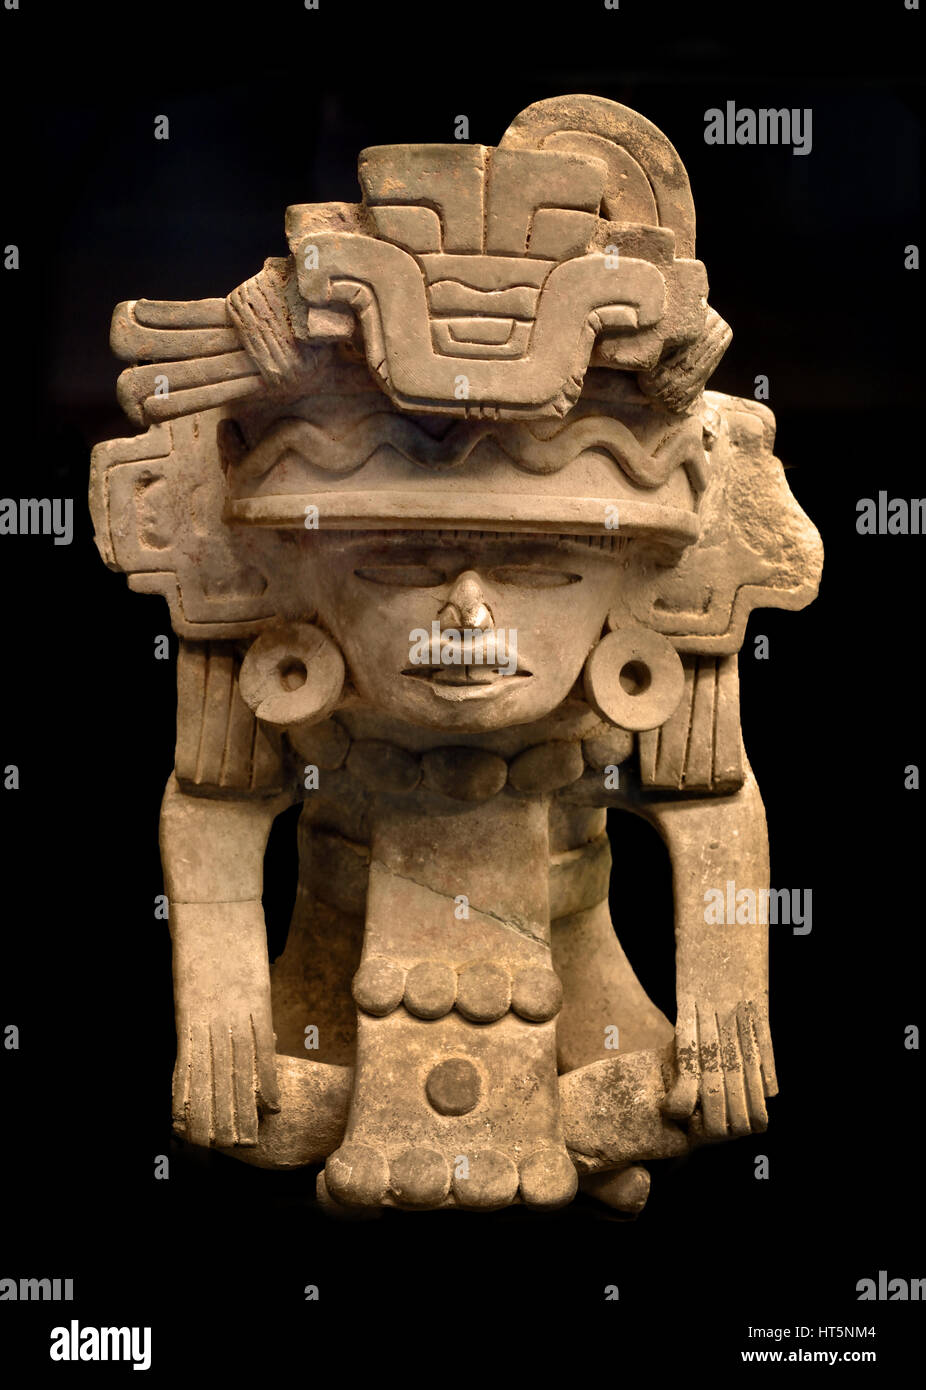 Figur Clay jar Zapoteken Zapotec Zivilisation Pre Columbian Mesoamerican Mittelamerika 500 v. Chr. - 900 n. Chr. Amerikaner / 1102-1181 in Mexiko 23,4 x 17,2 x 15,4 cm. Stockfoto